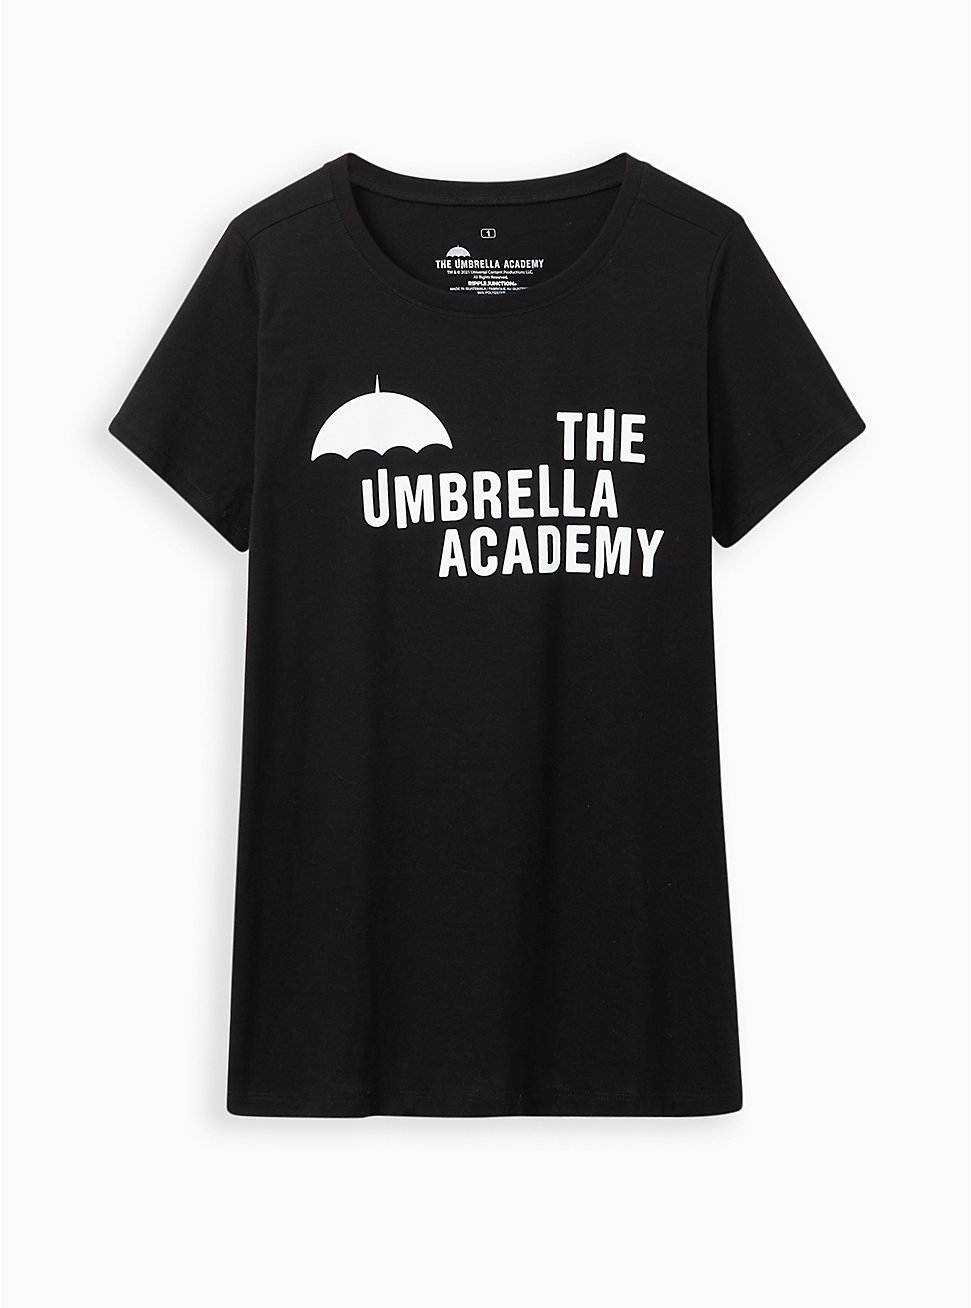 Plus Size Slim Fit Crew Tee – Signature Jersey The Umbrella Academy Black, DEEP BLACK, hi-res